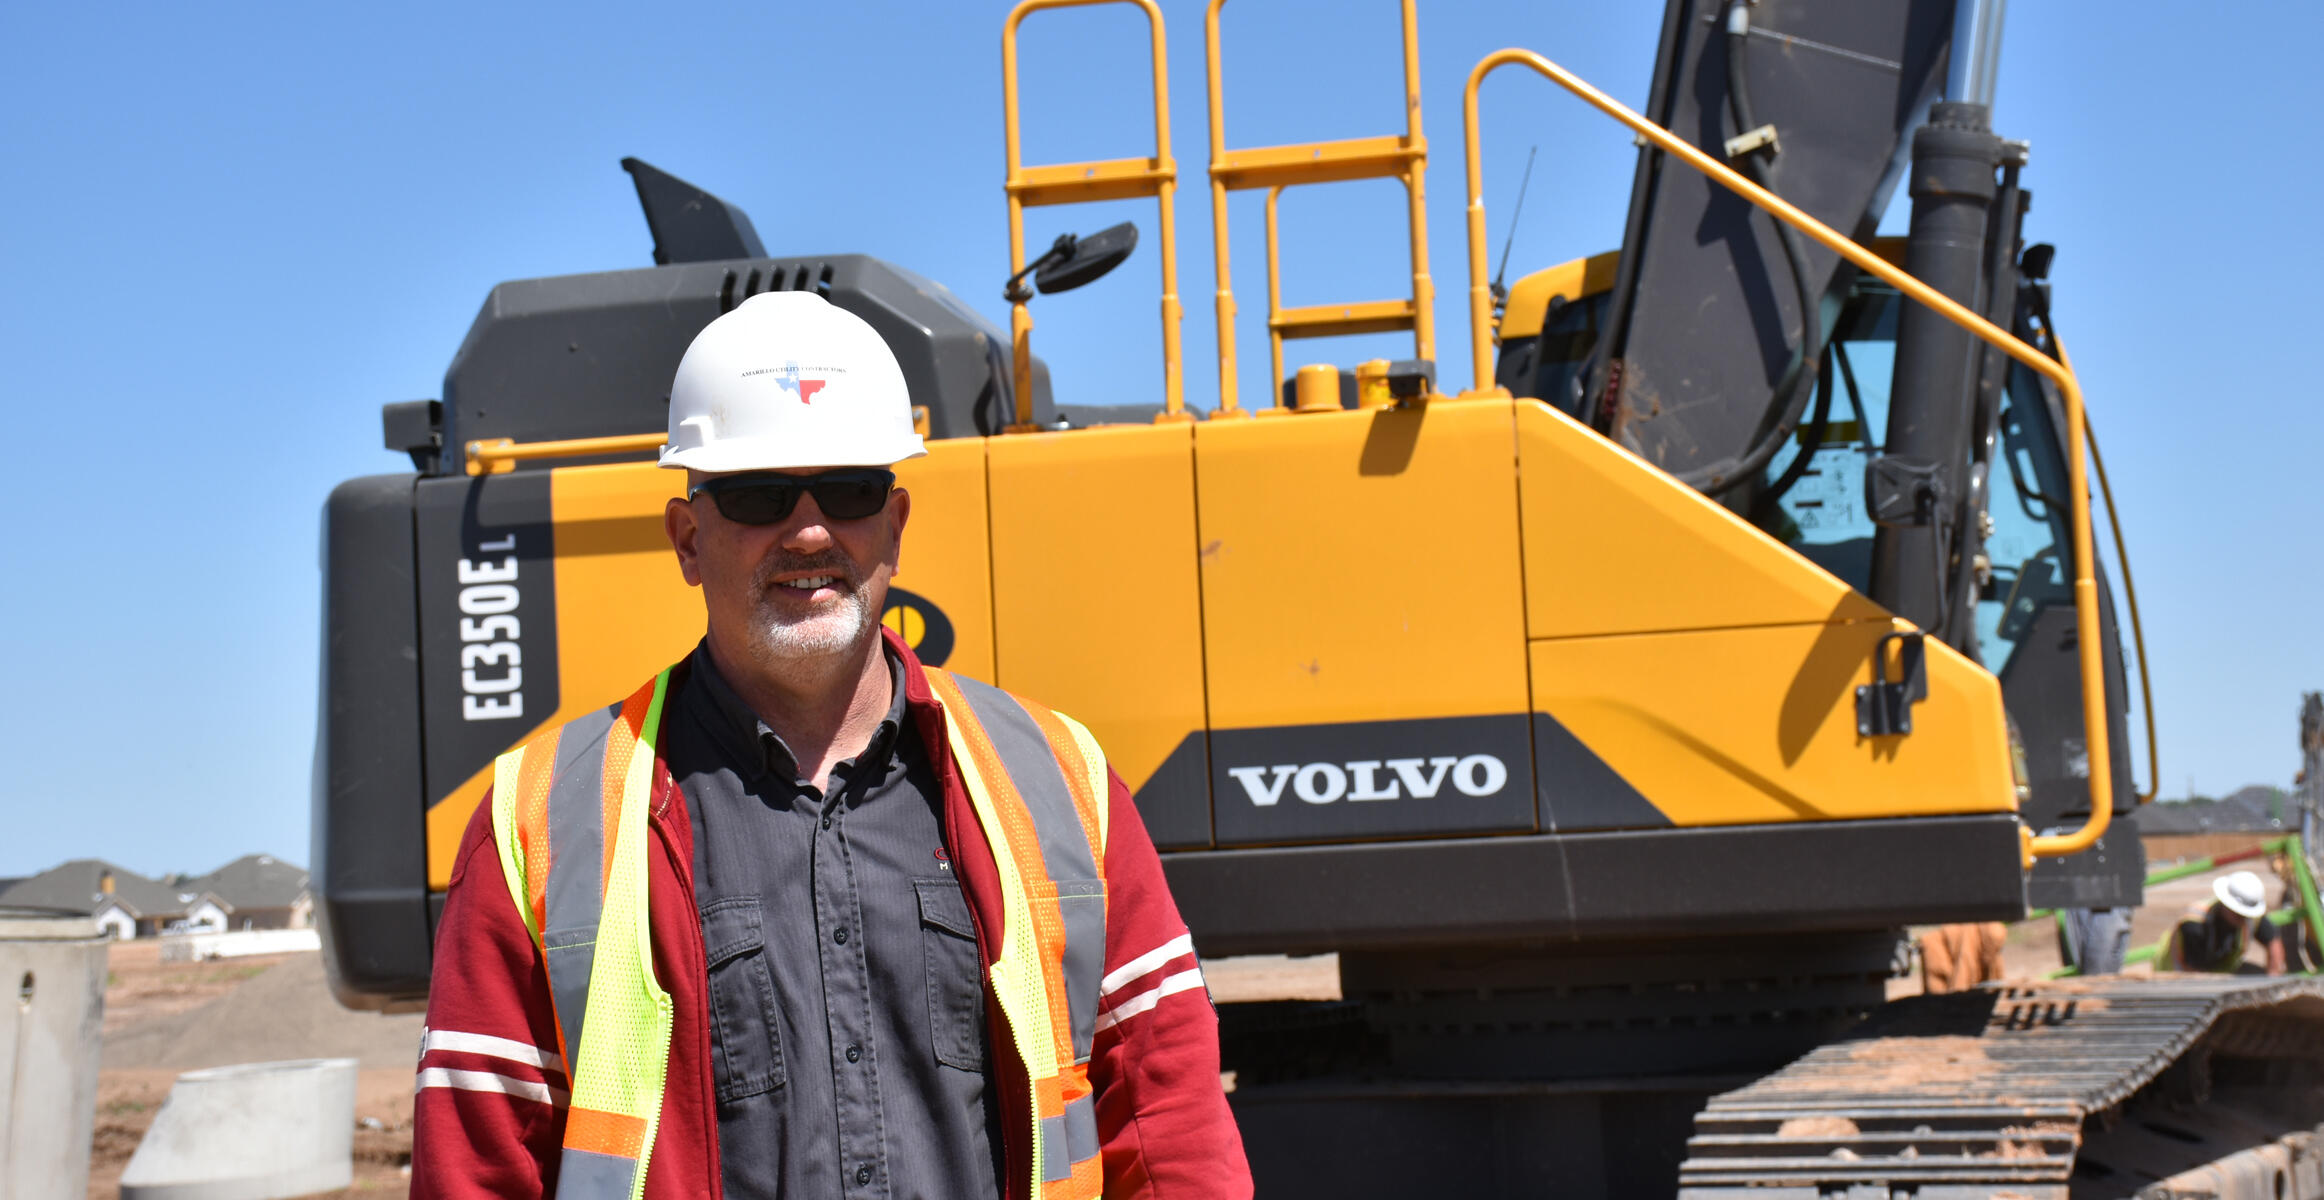 Operator Rusty Wilkinson uses a Volvo EC350E crawler excavator in Amarillo, TX